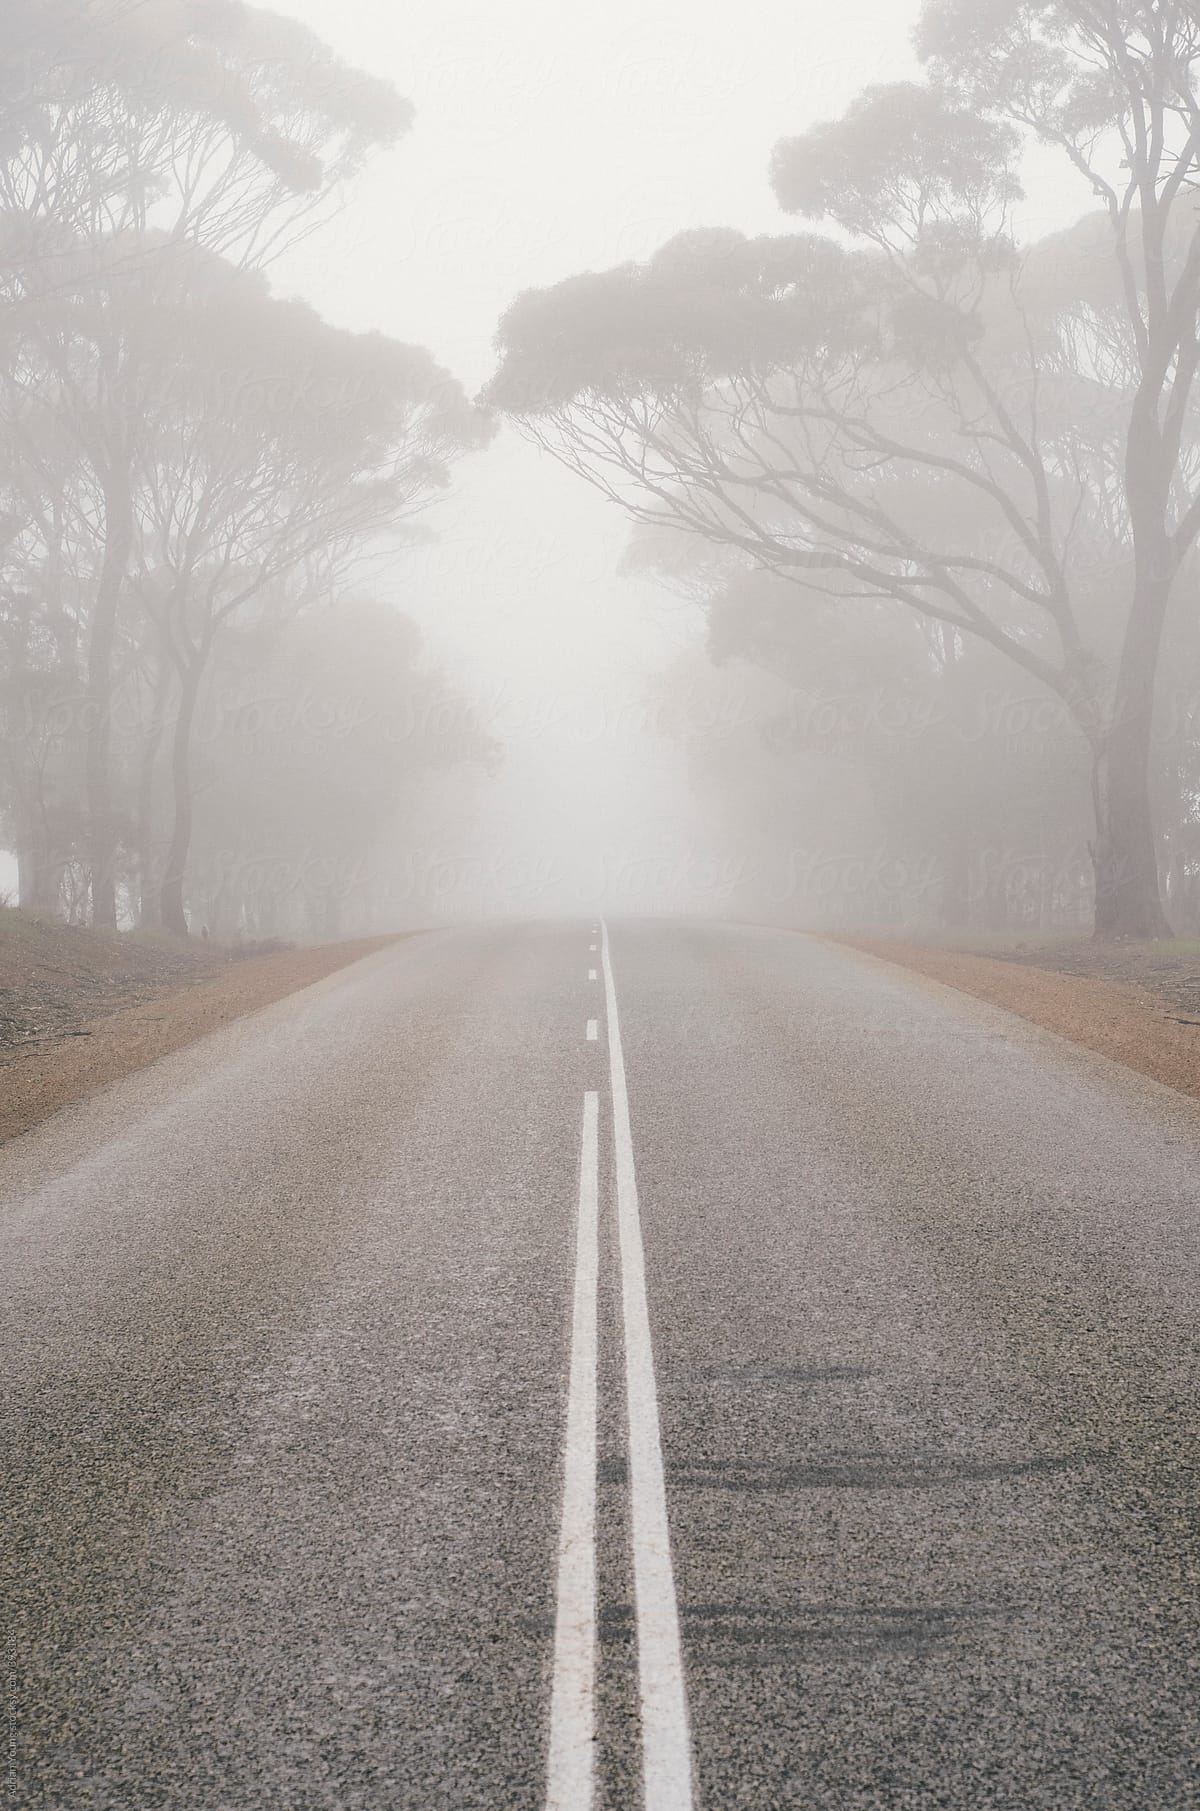 Foggy Road Ahead